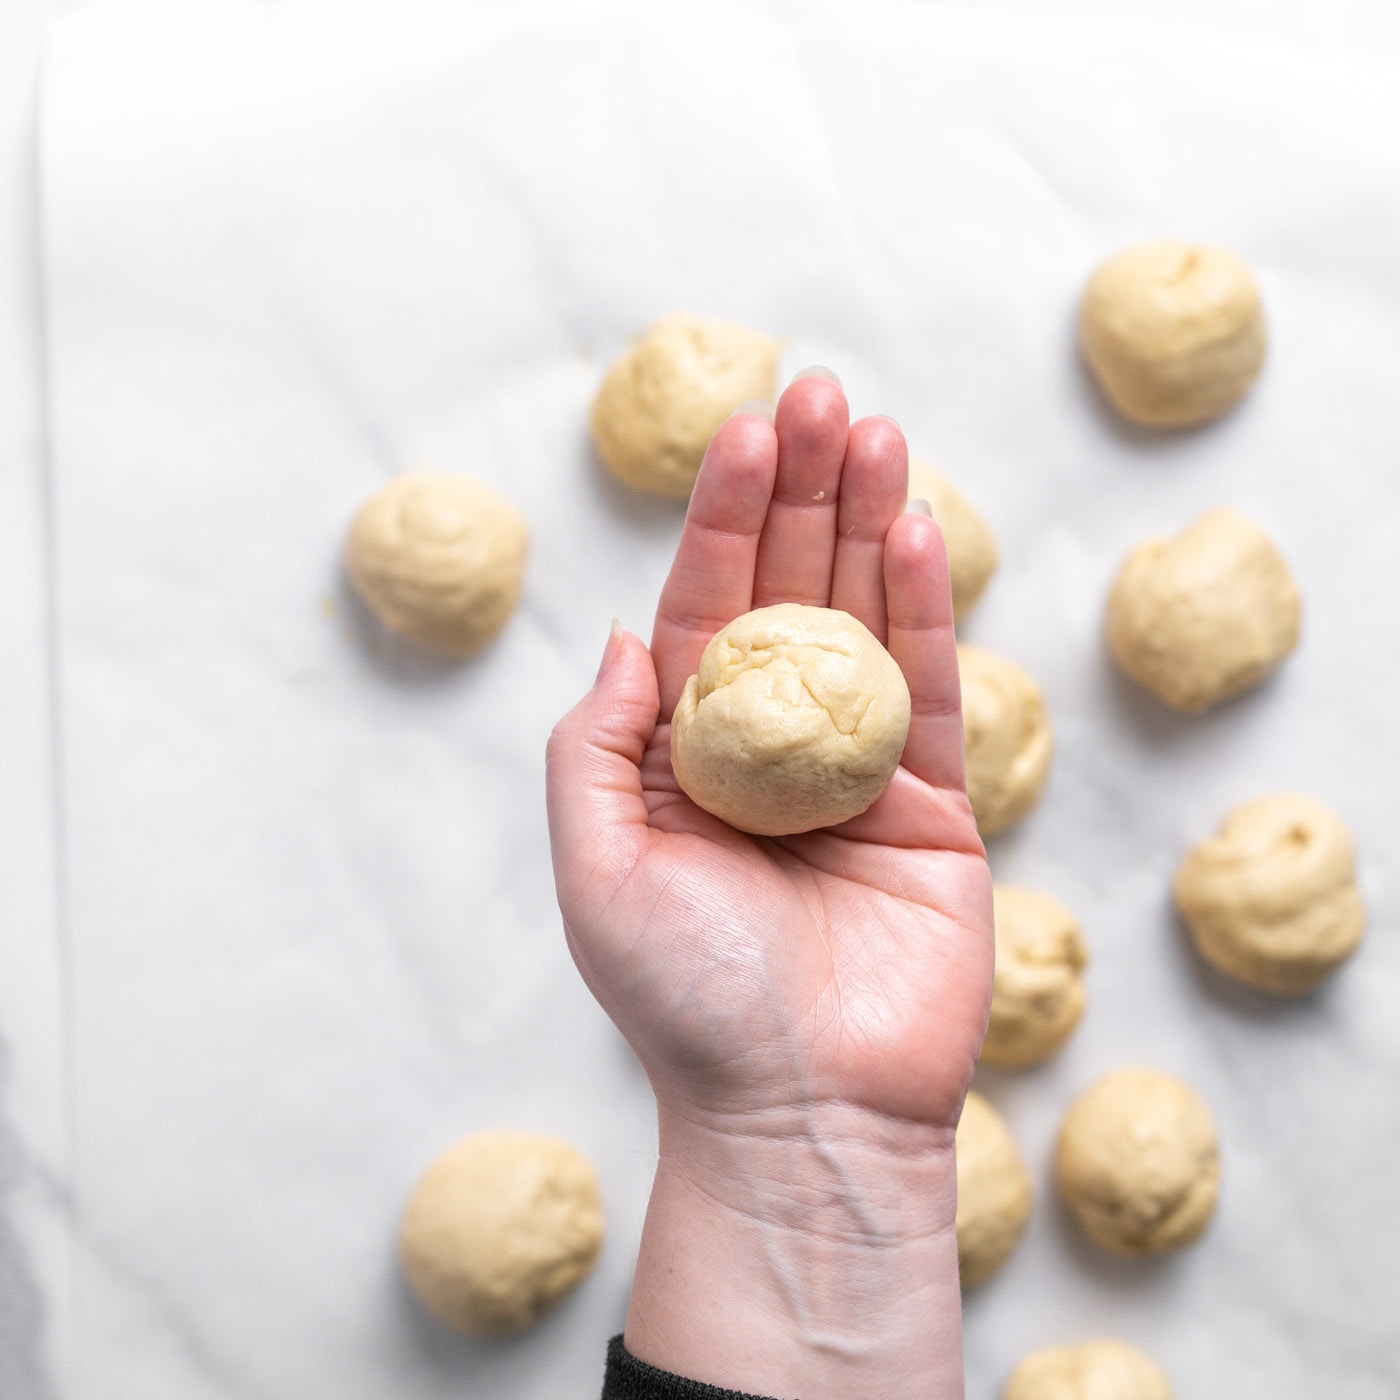 dough balls in hand